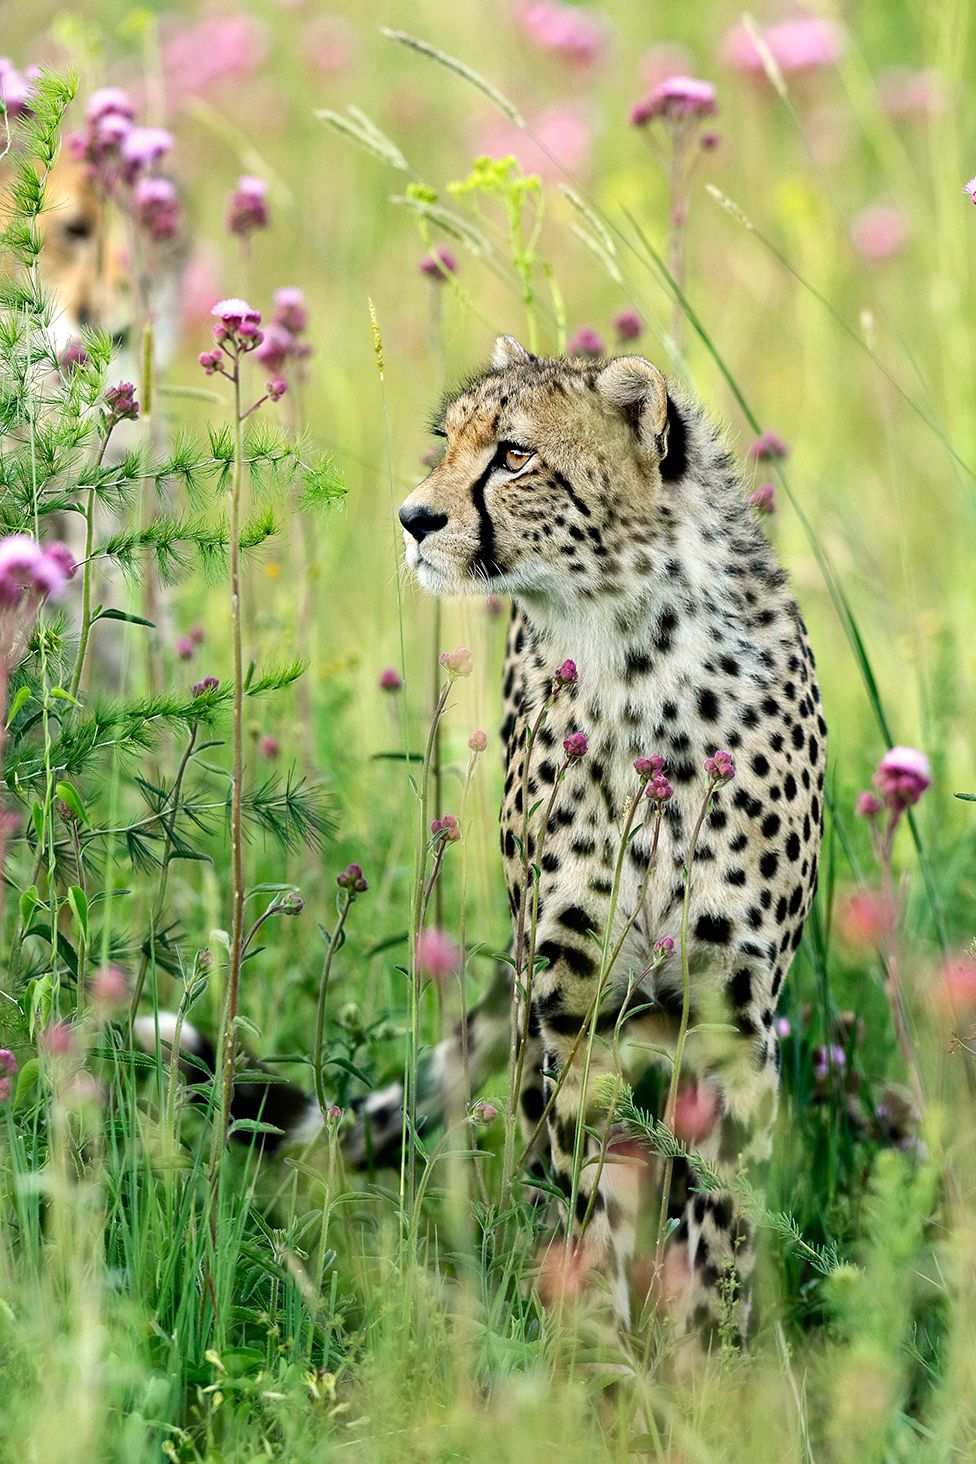 A cheetah amongst flowers